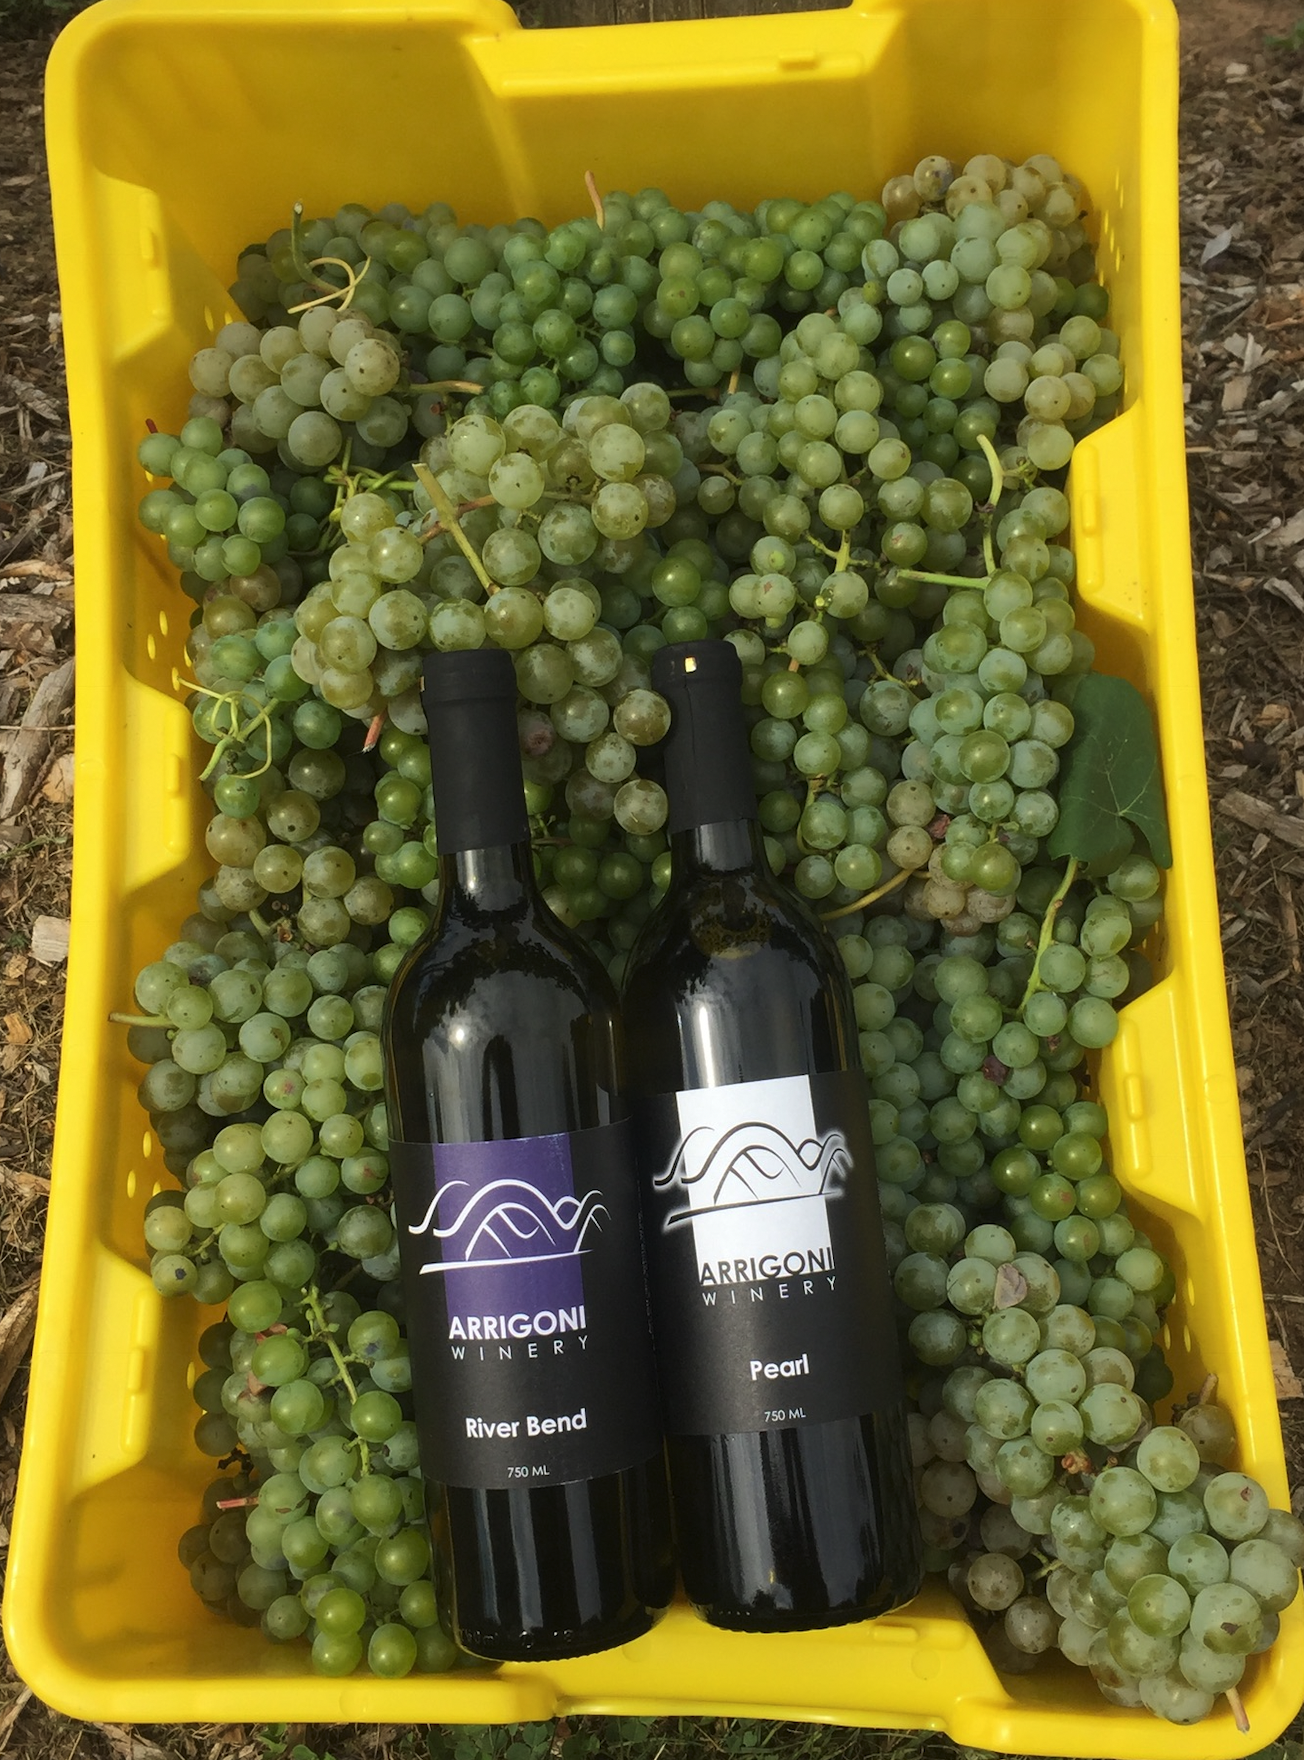 Arrigoni Winery - Wine on green grapes